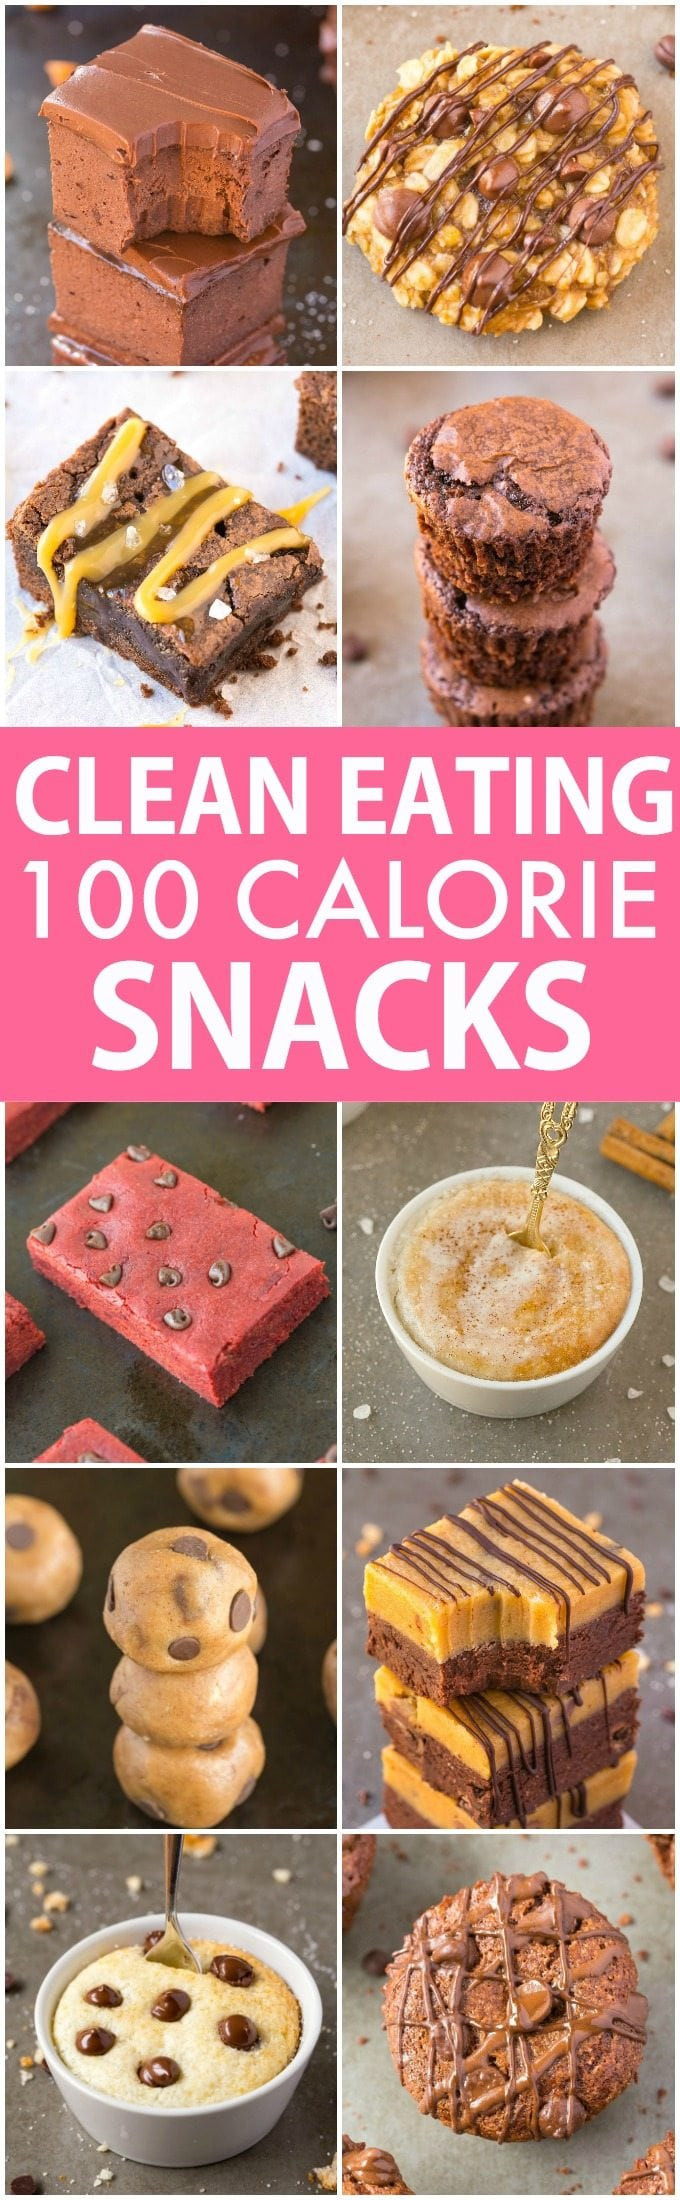 Low Calorie Desserts Under 100 Calories
 10 Clean Eating Healthy Sweet Snacks Under 100 Calories